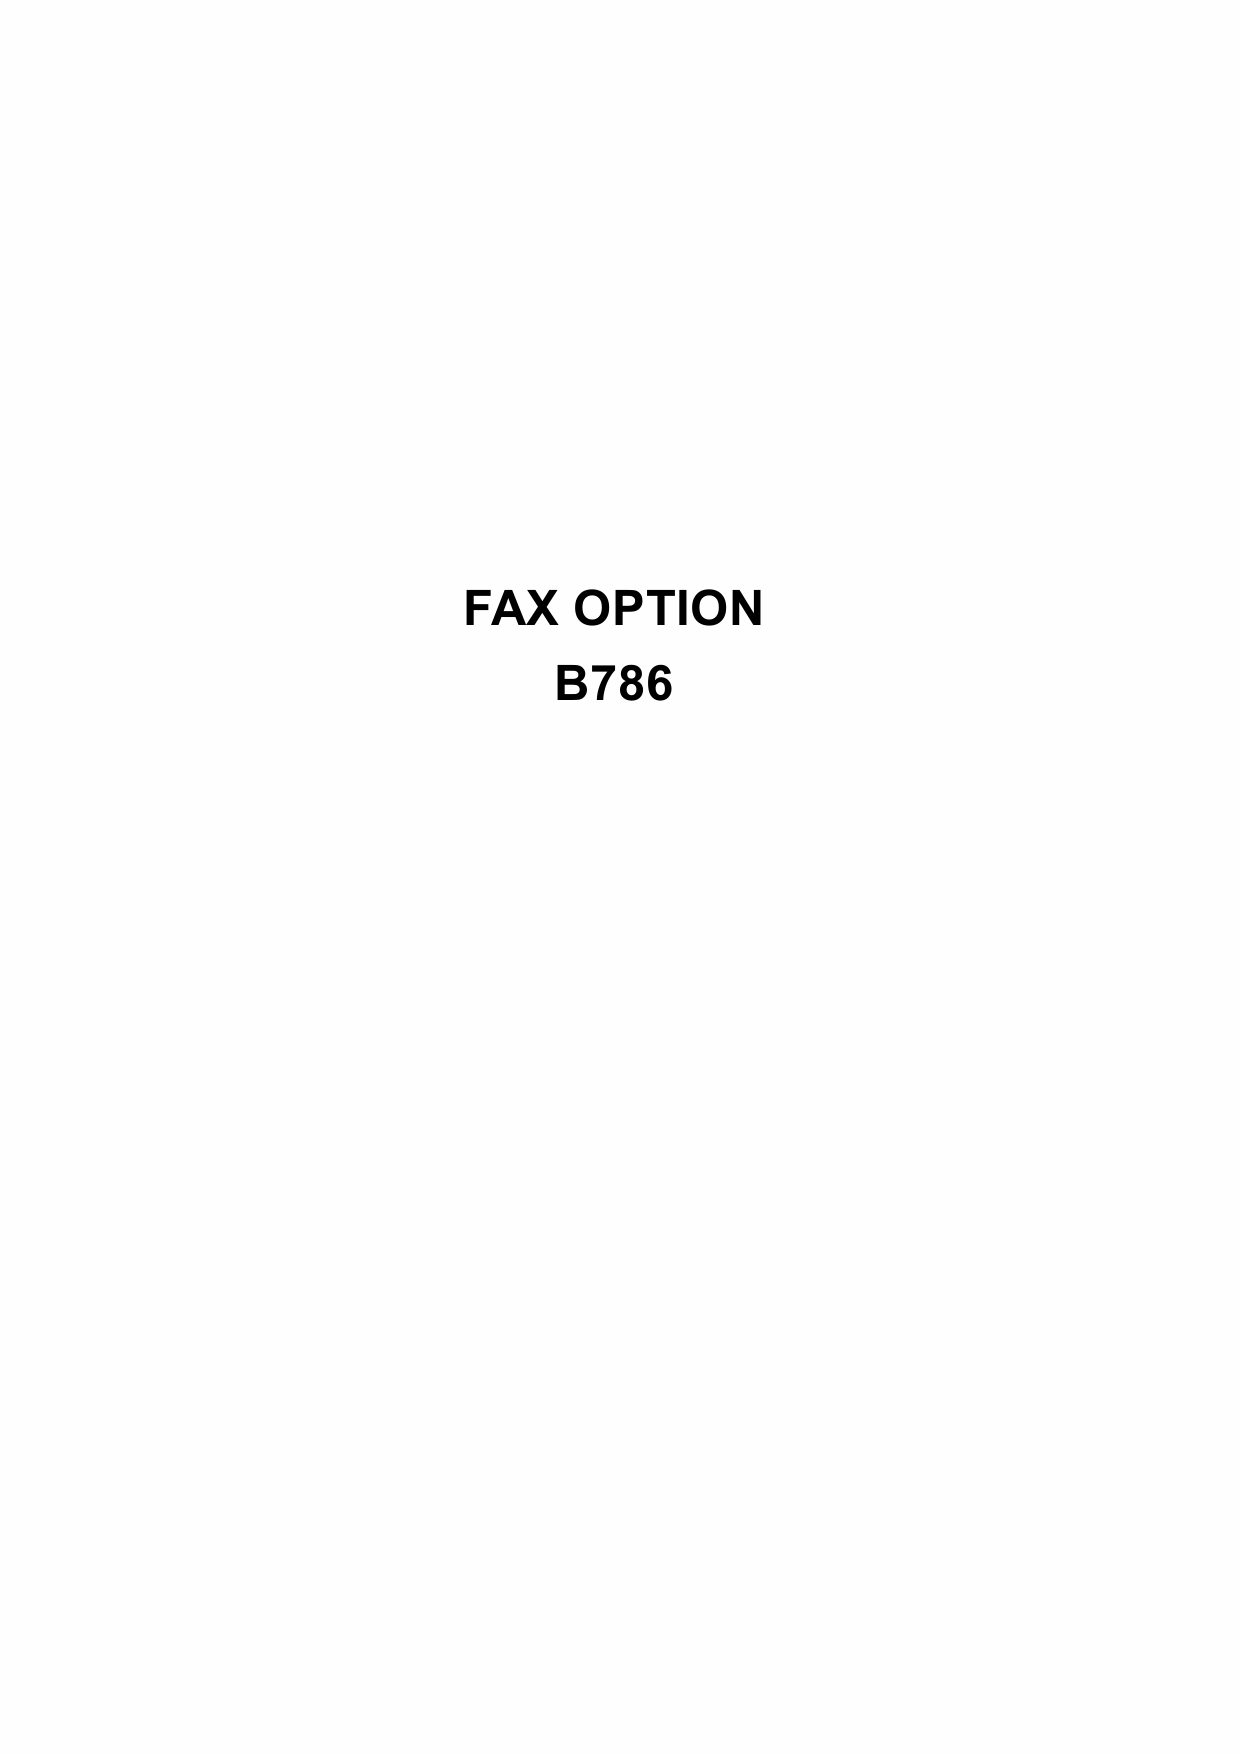 RICOH Options B786 FAX-OPTION Service Manual PDF download-1